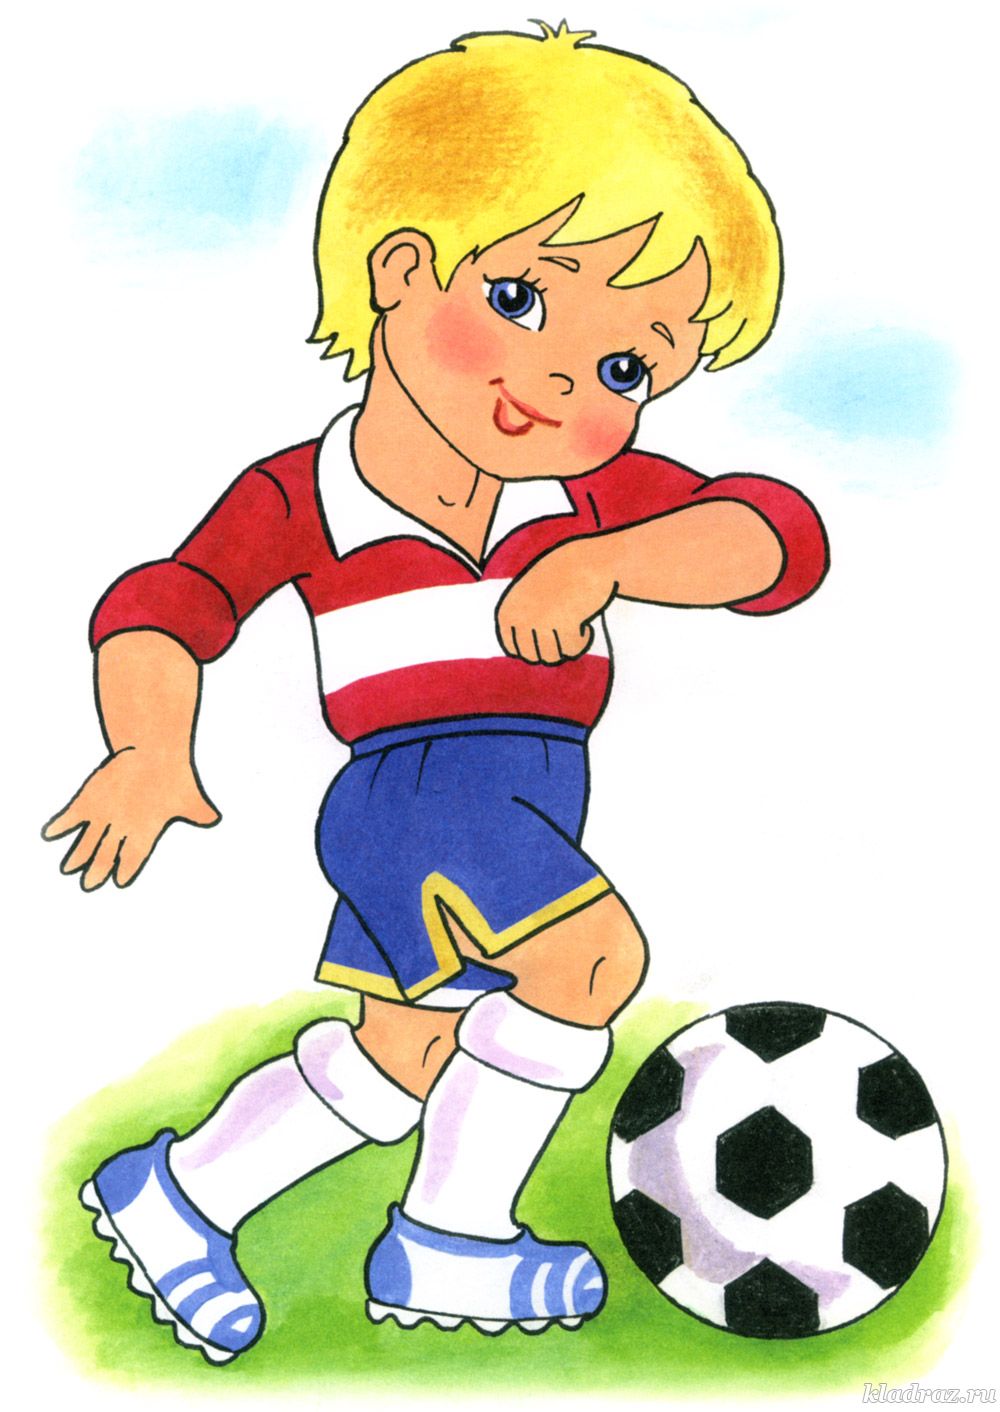 Футболист картинка нарисованная